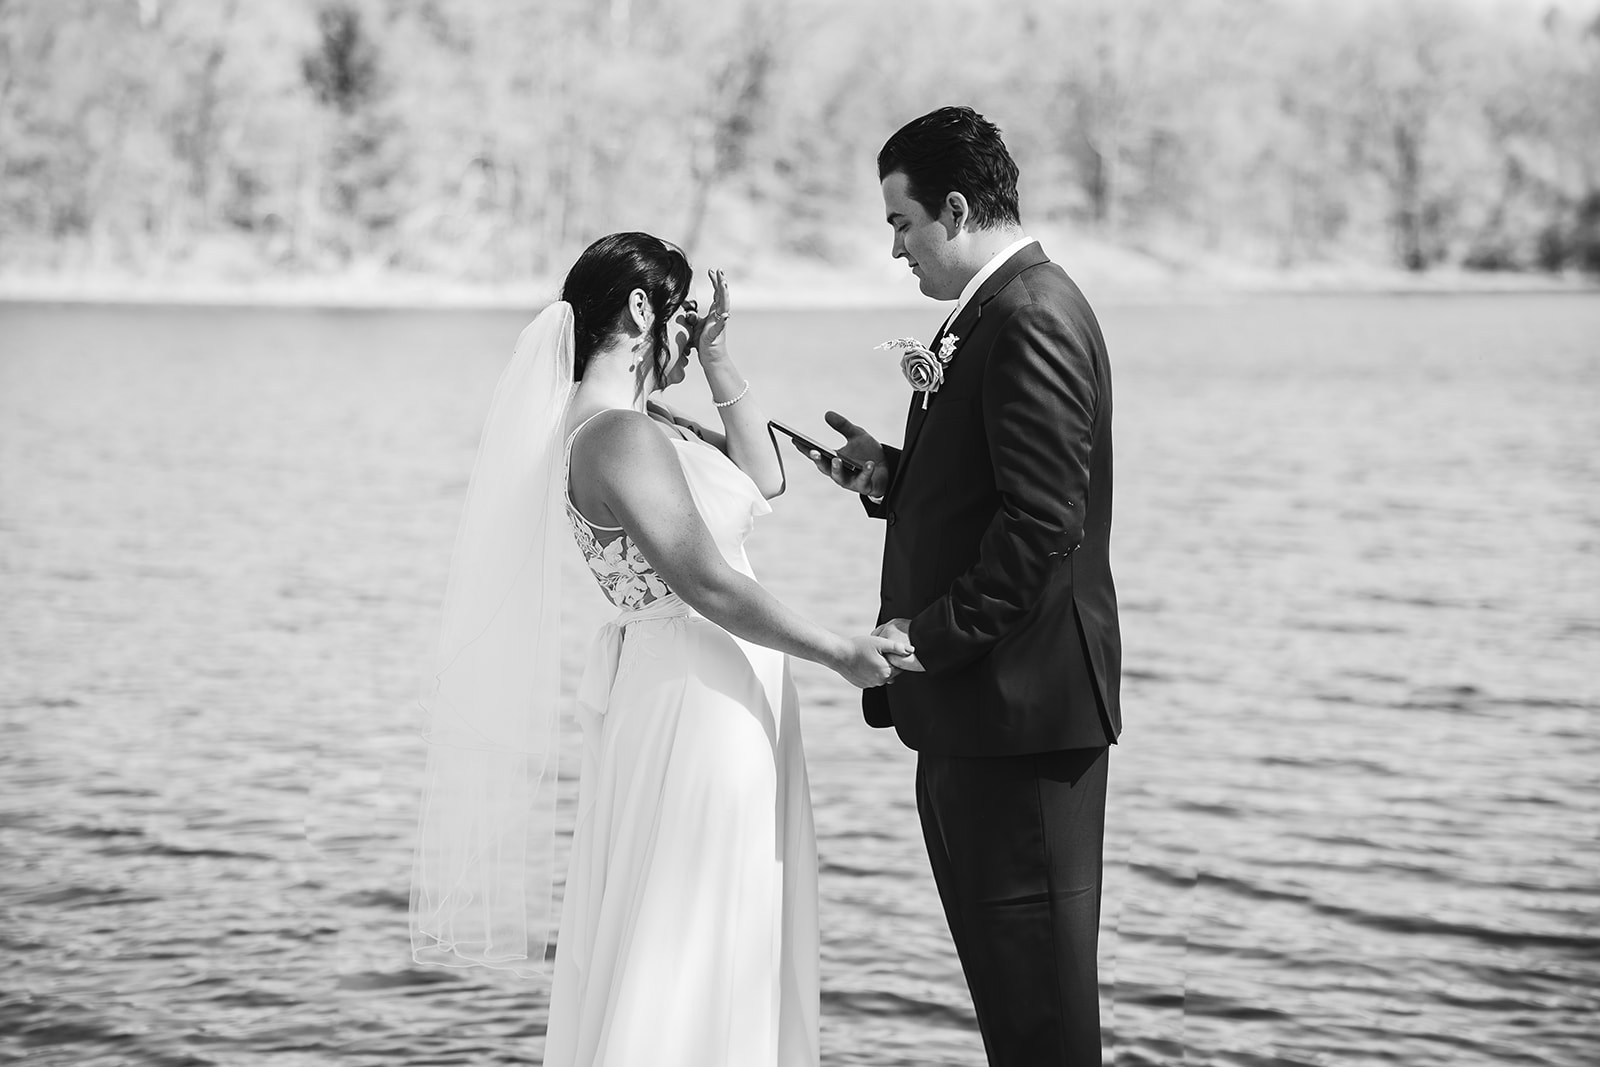 Intimate Northern MN Lakefront Resort wedding by Alyssa Ashley Photography